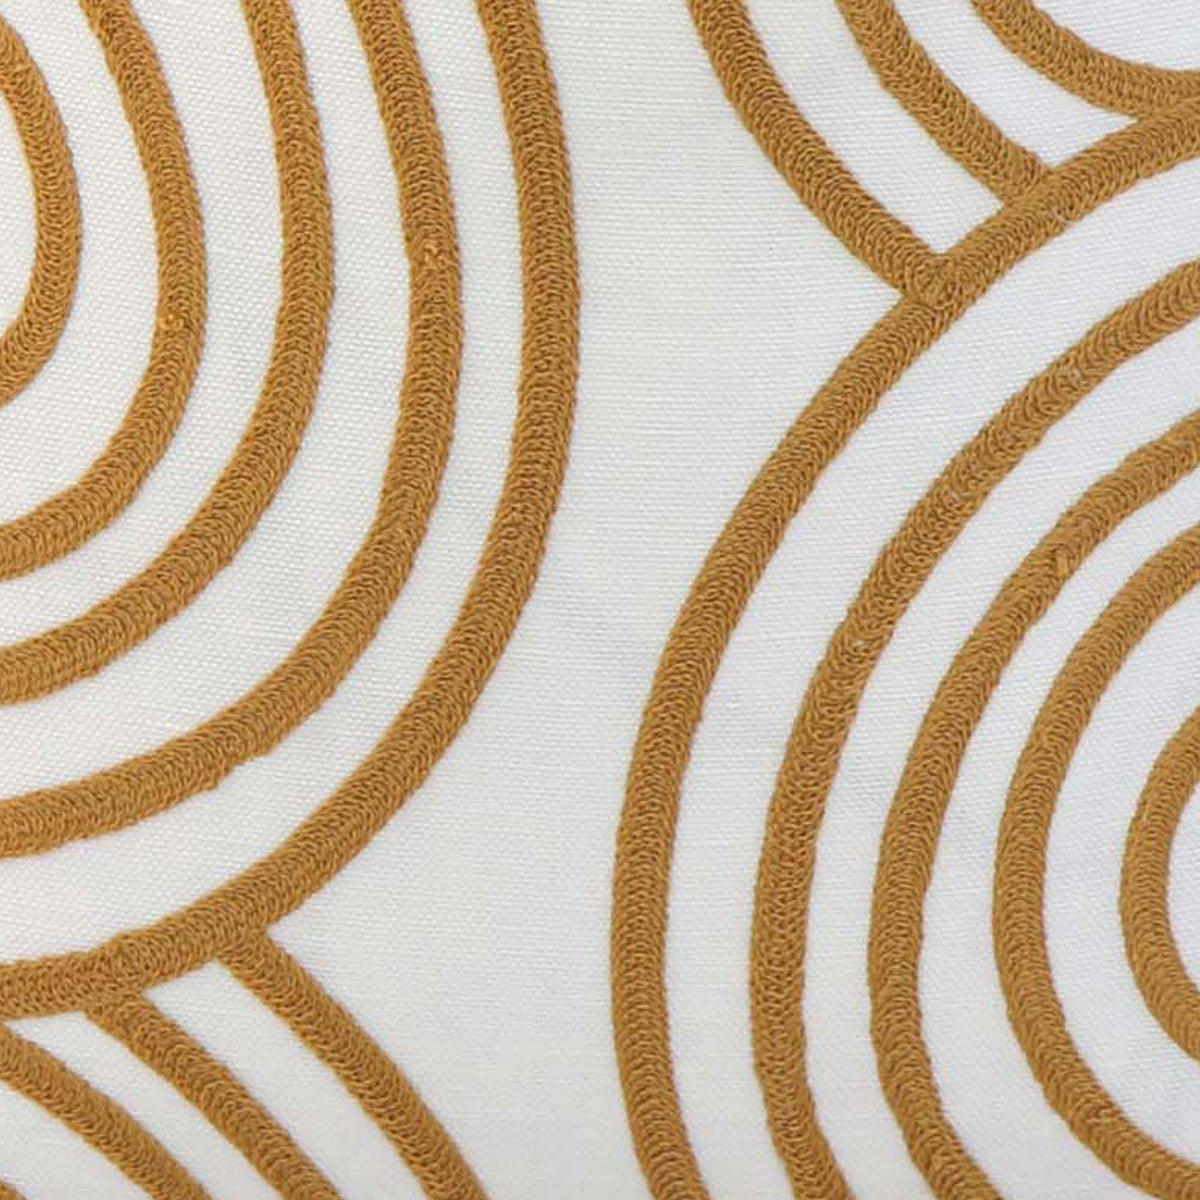 Giraldi Embroidery Gold / 4x4 inch Fabric Swatch